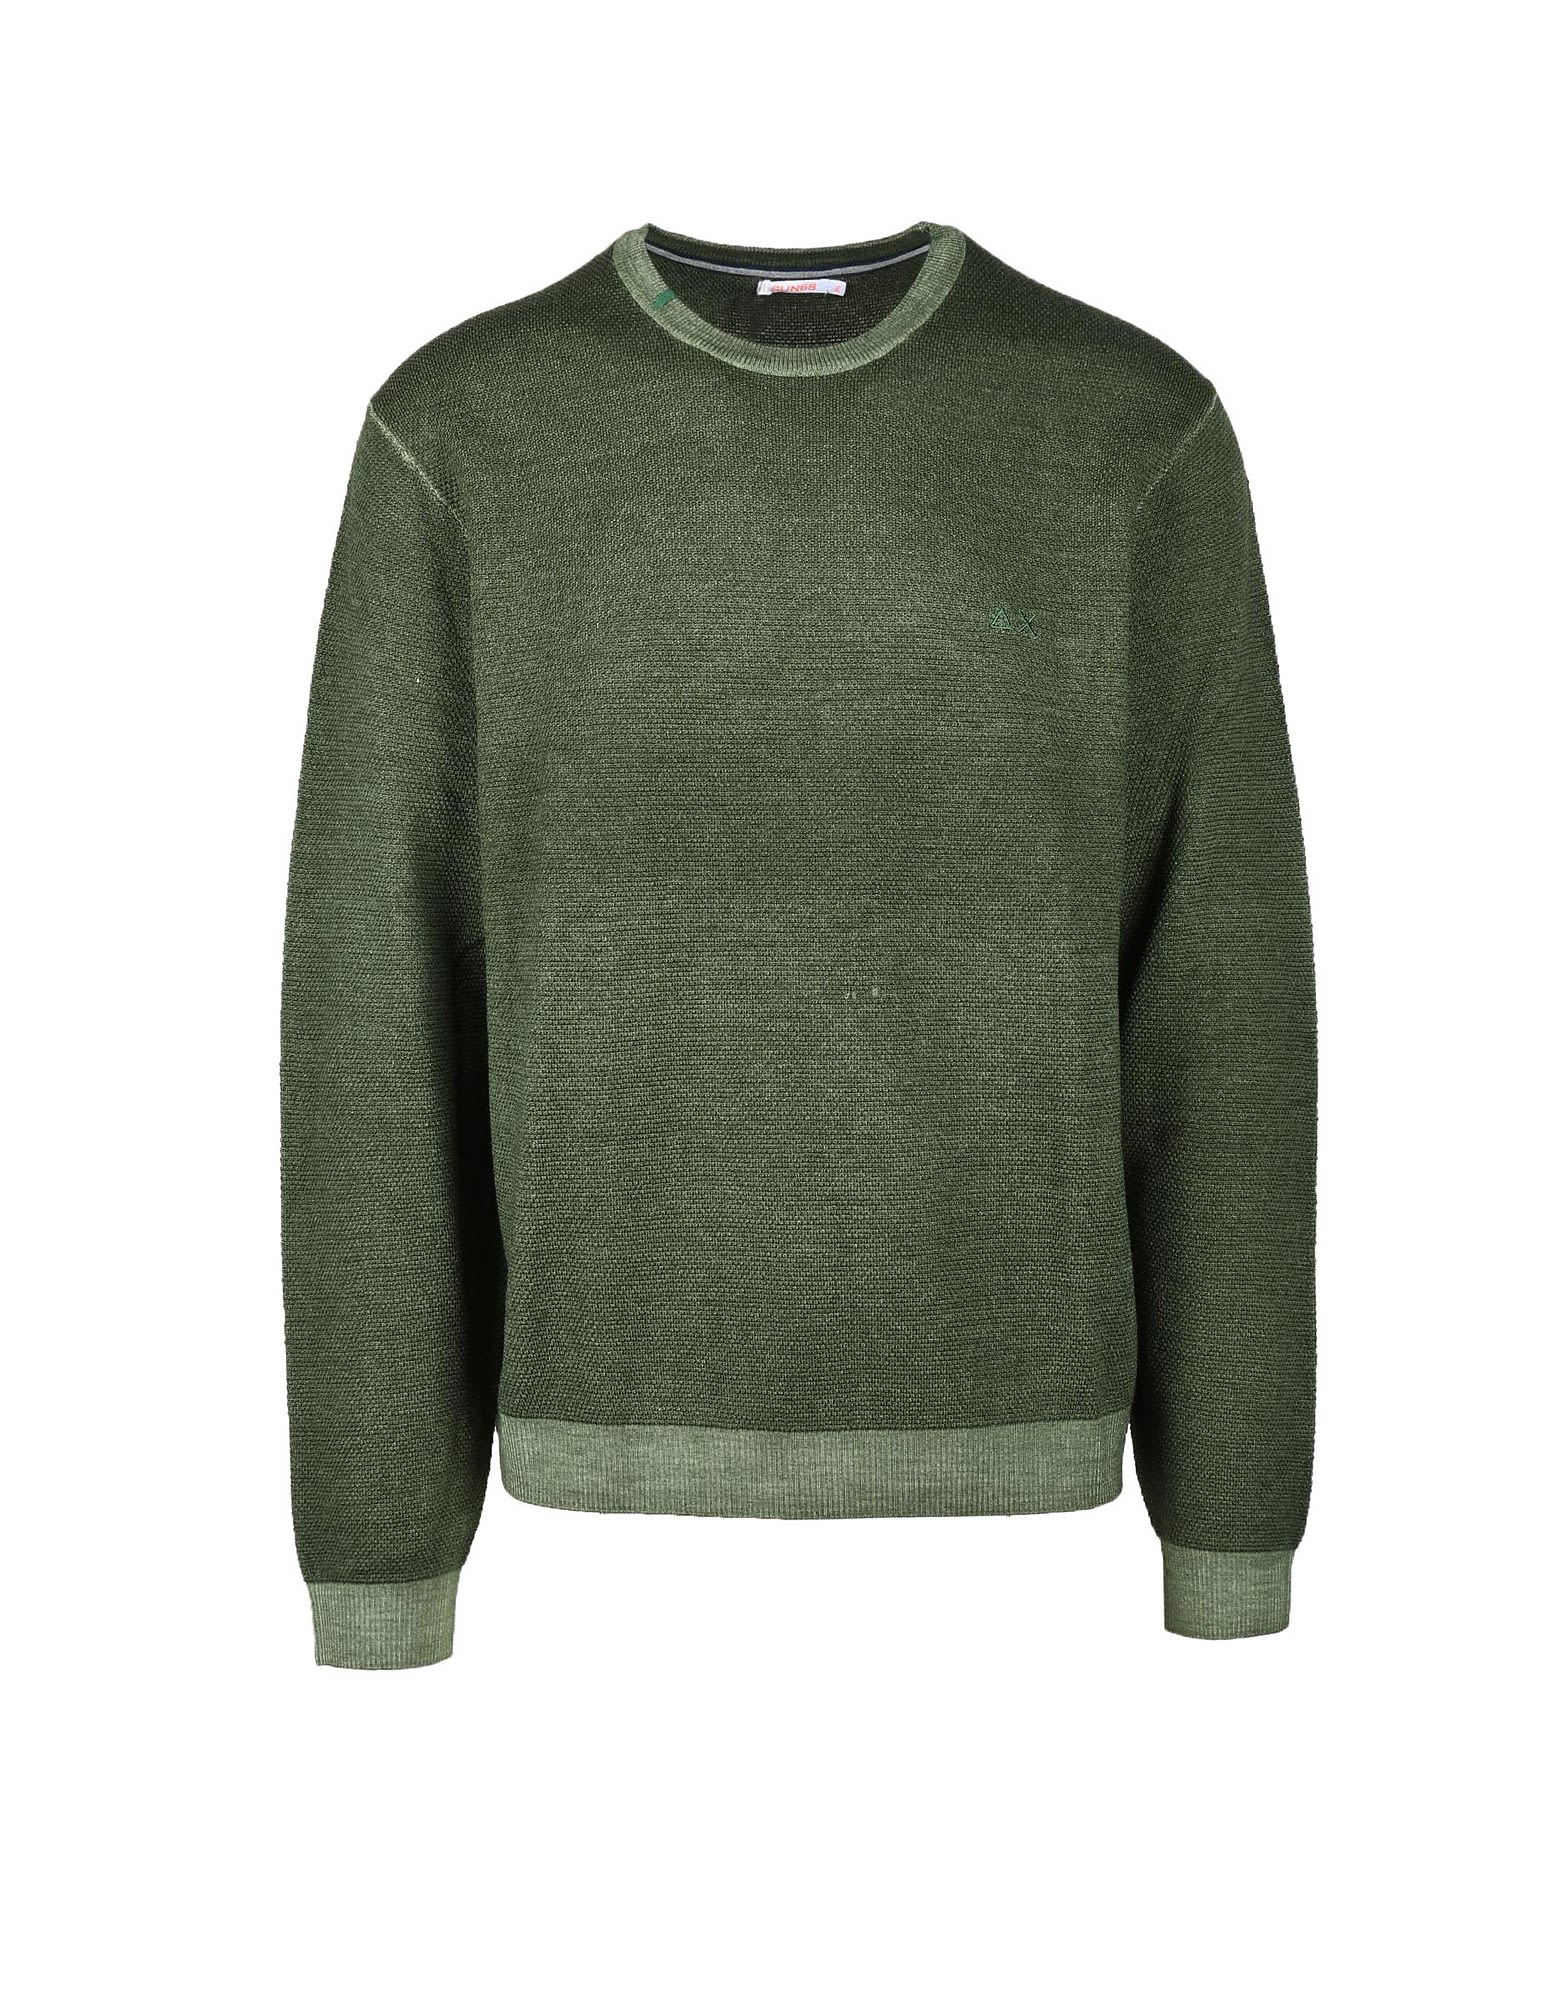 Sun 68 Mens Green Sweater